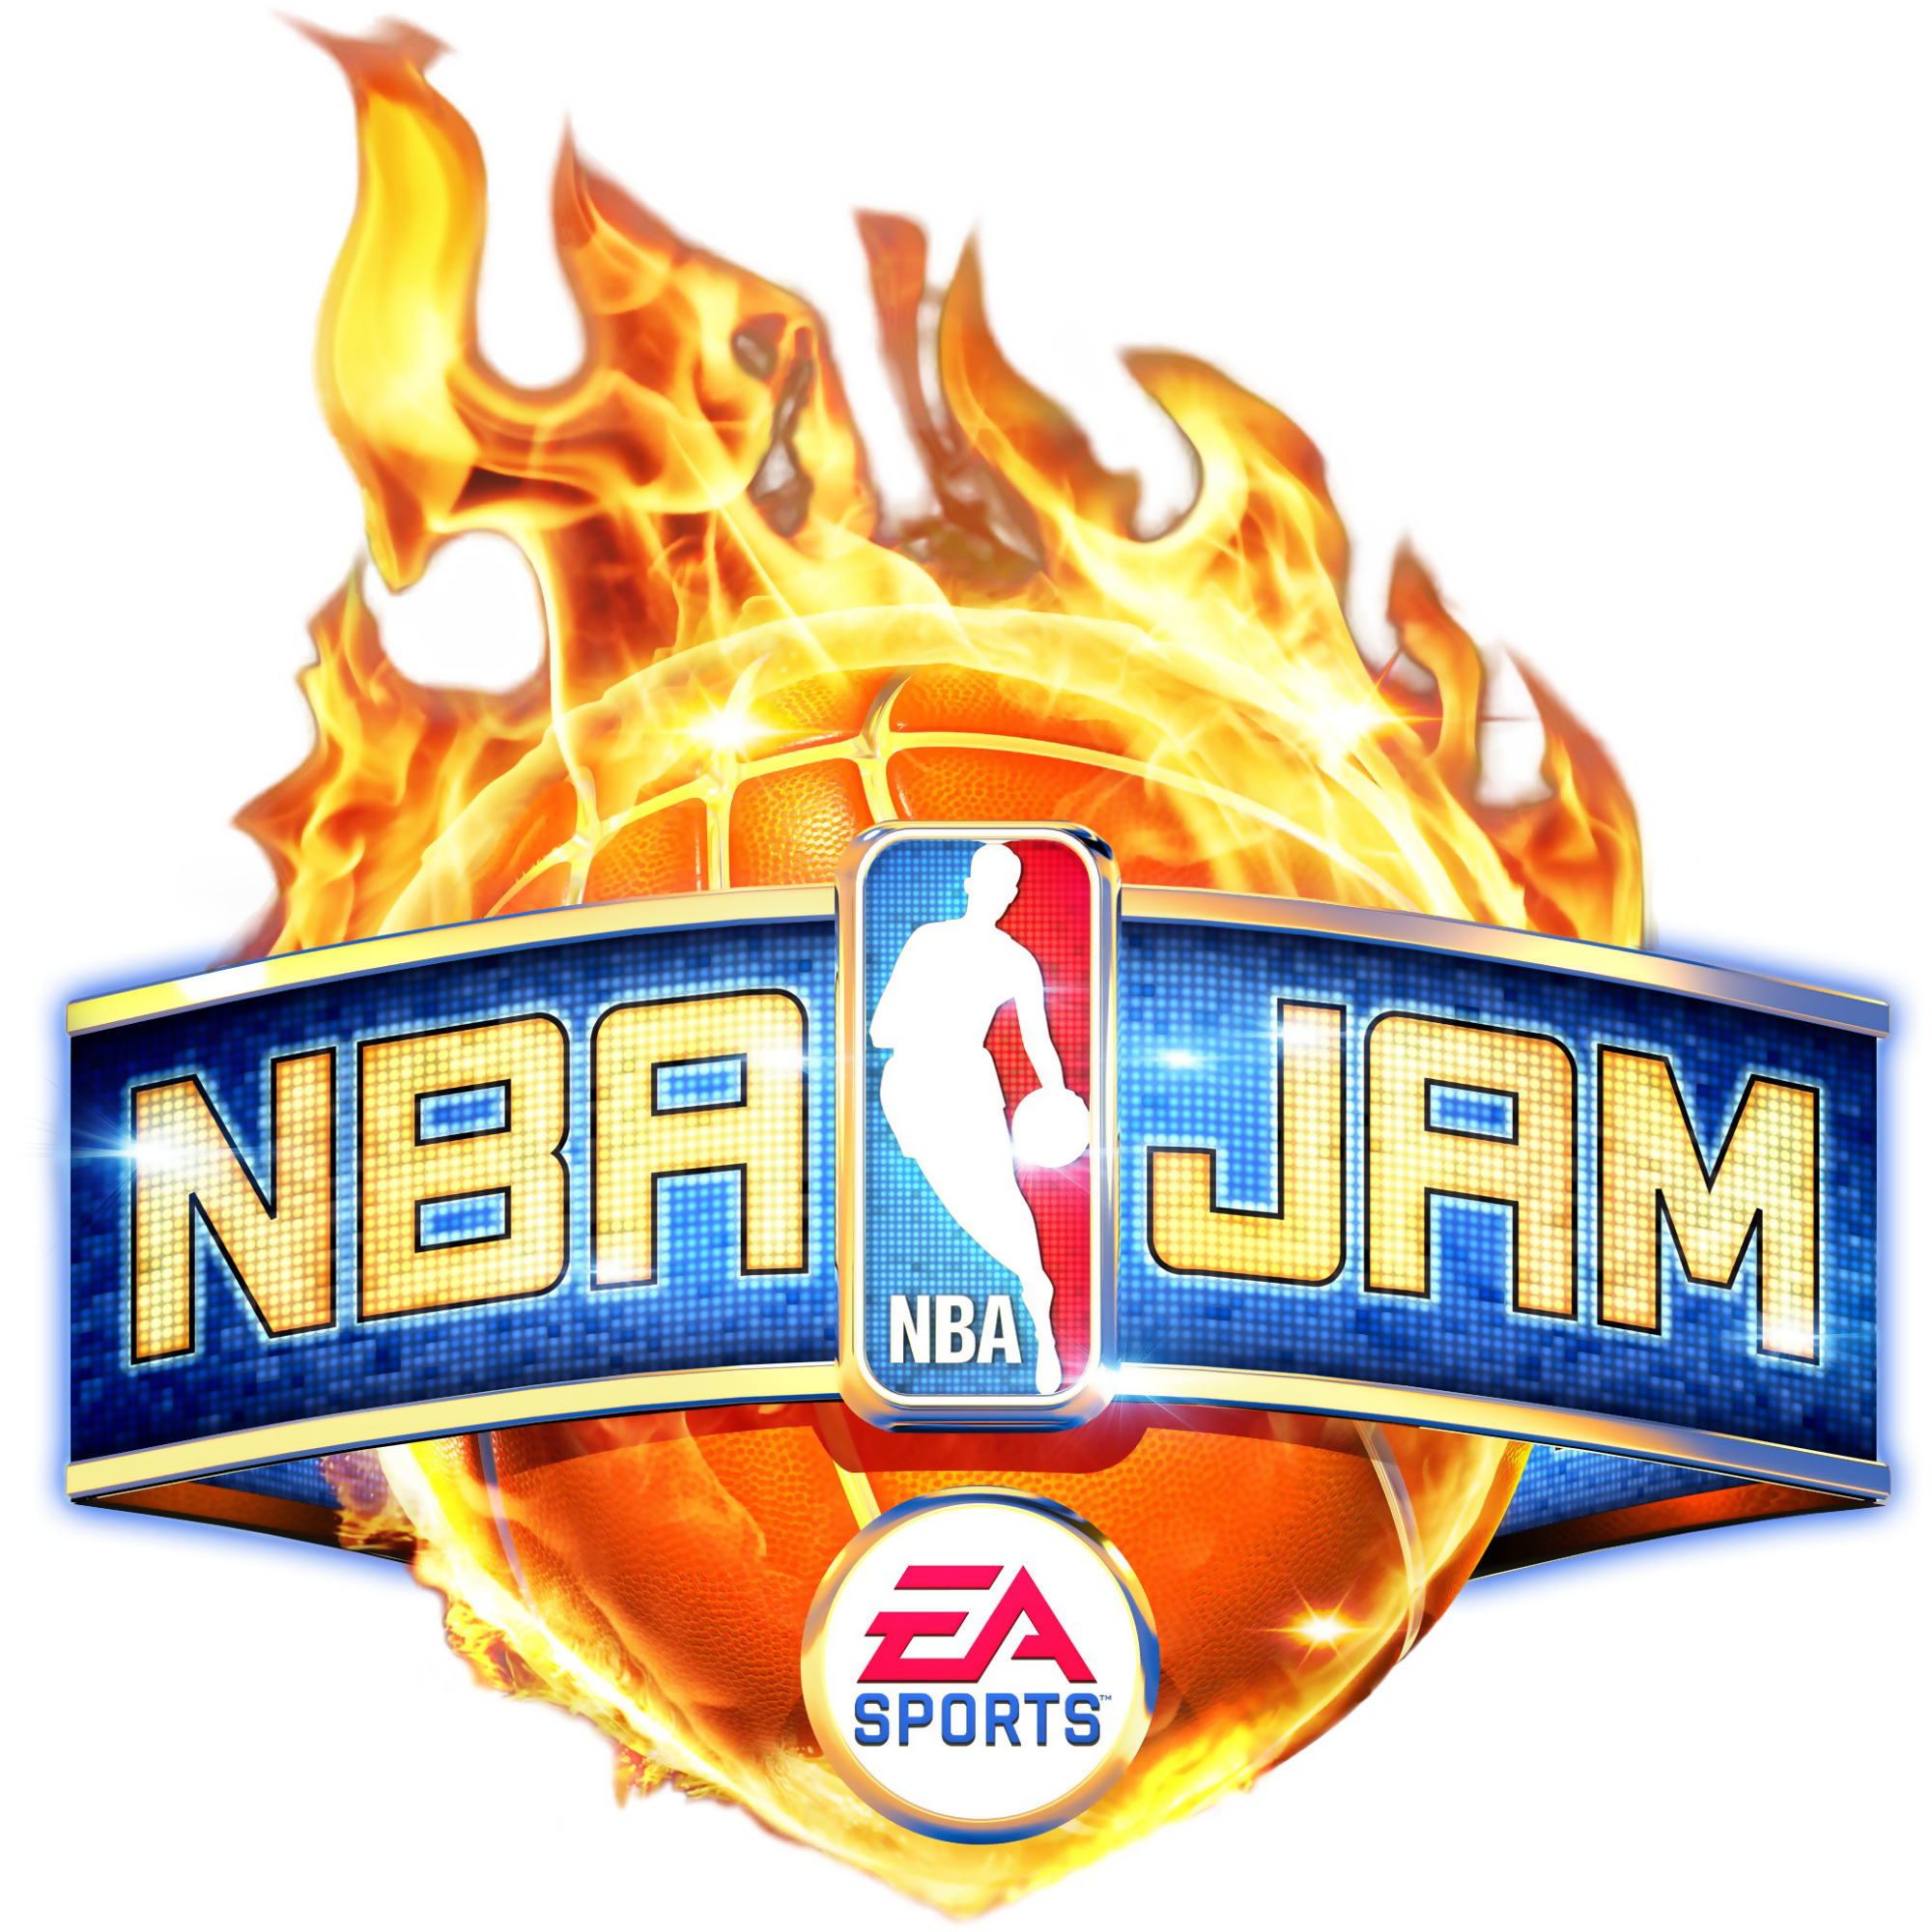 NBA Jam images - Image #4016 